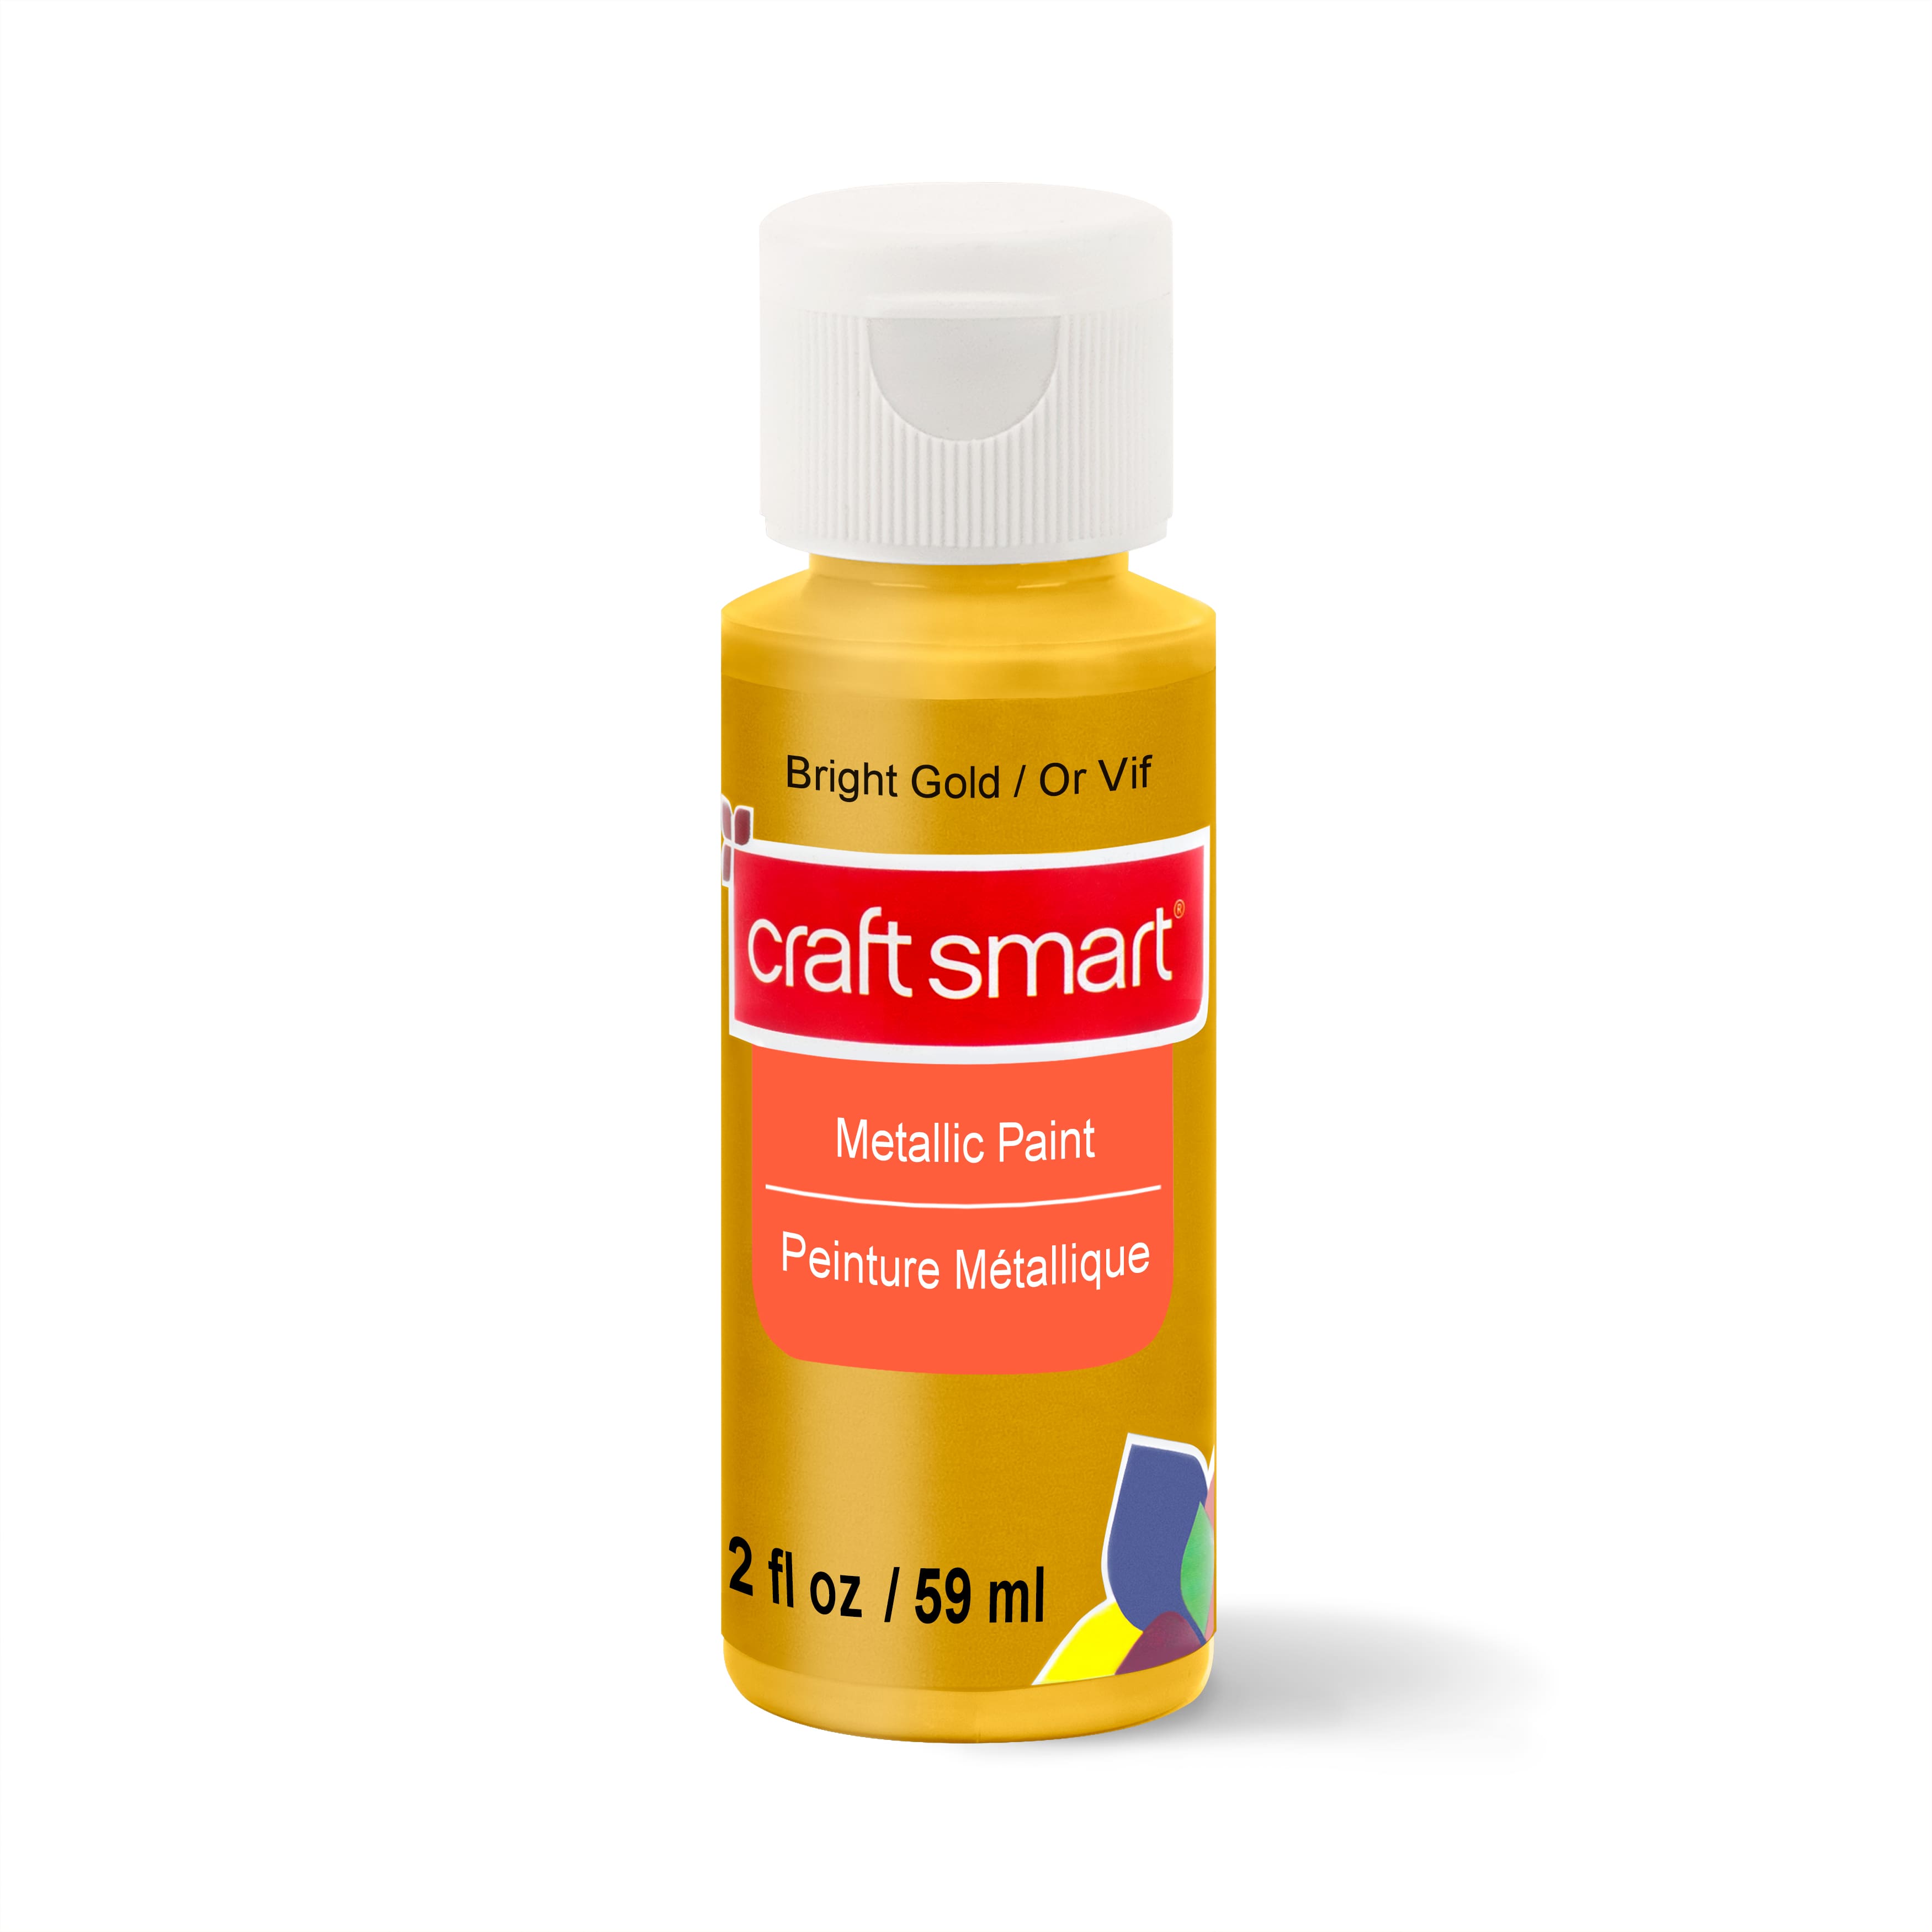 Craft Smart michaels bulk 12 packs: 16 ct. (192 total) matte acrylic